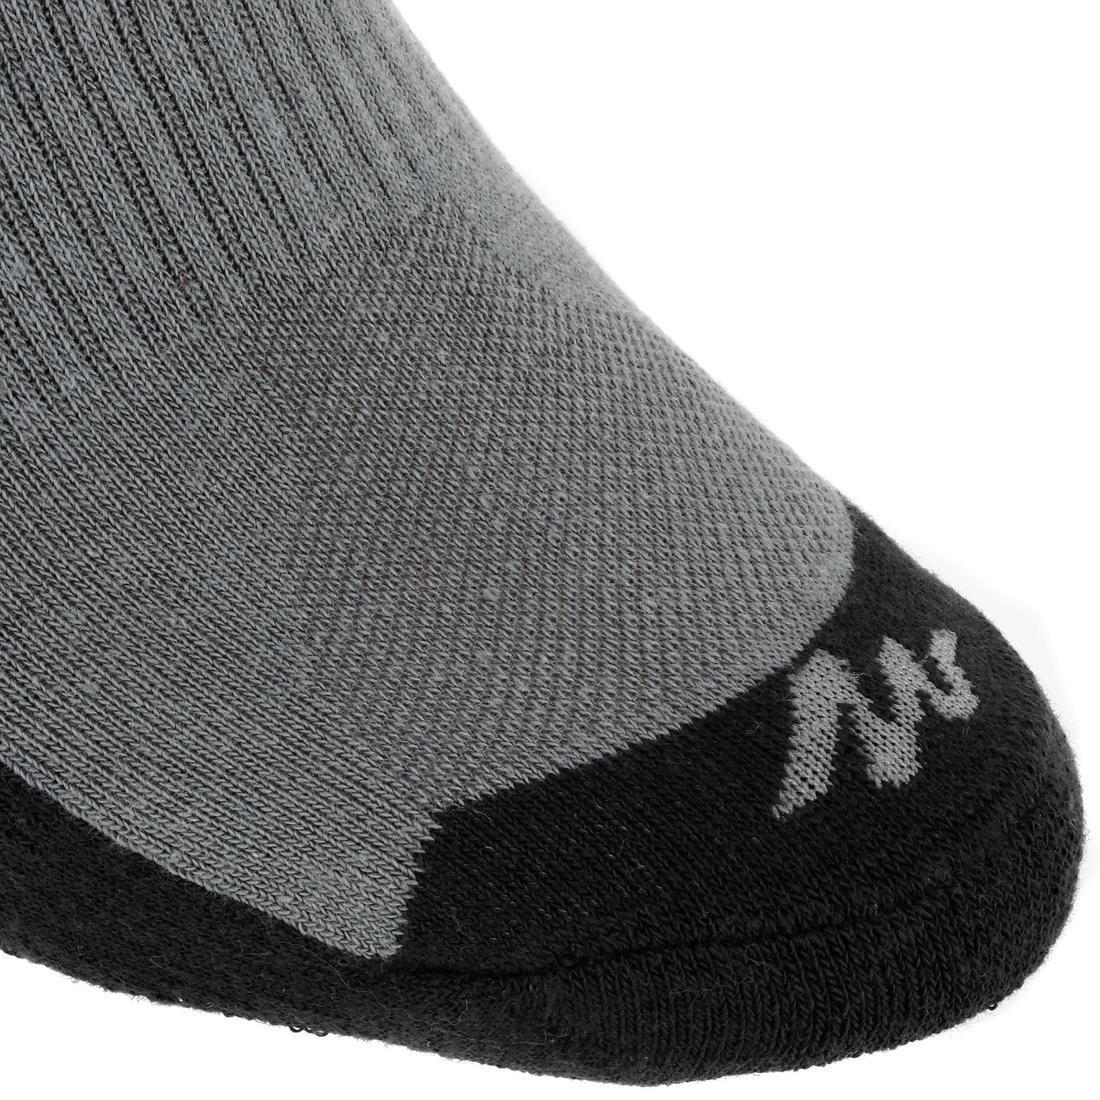 QUECHUA - High Walking Socks 2 Pairs, Grey